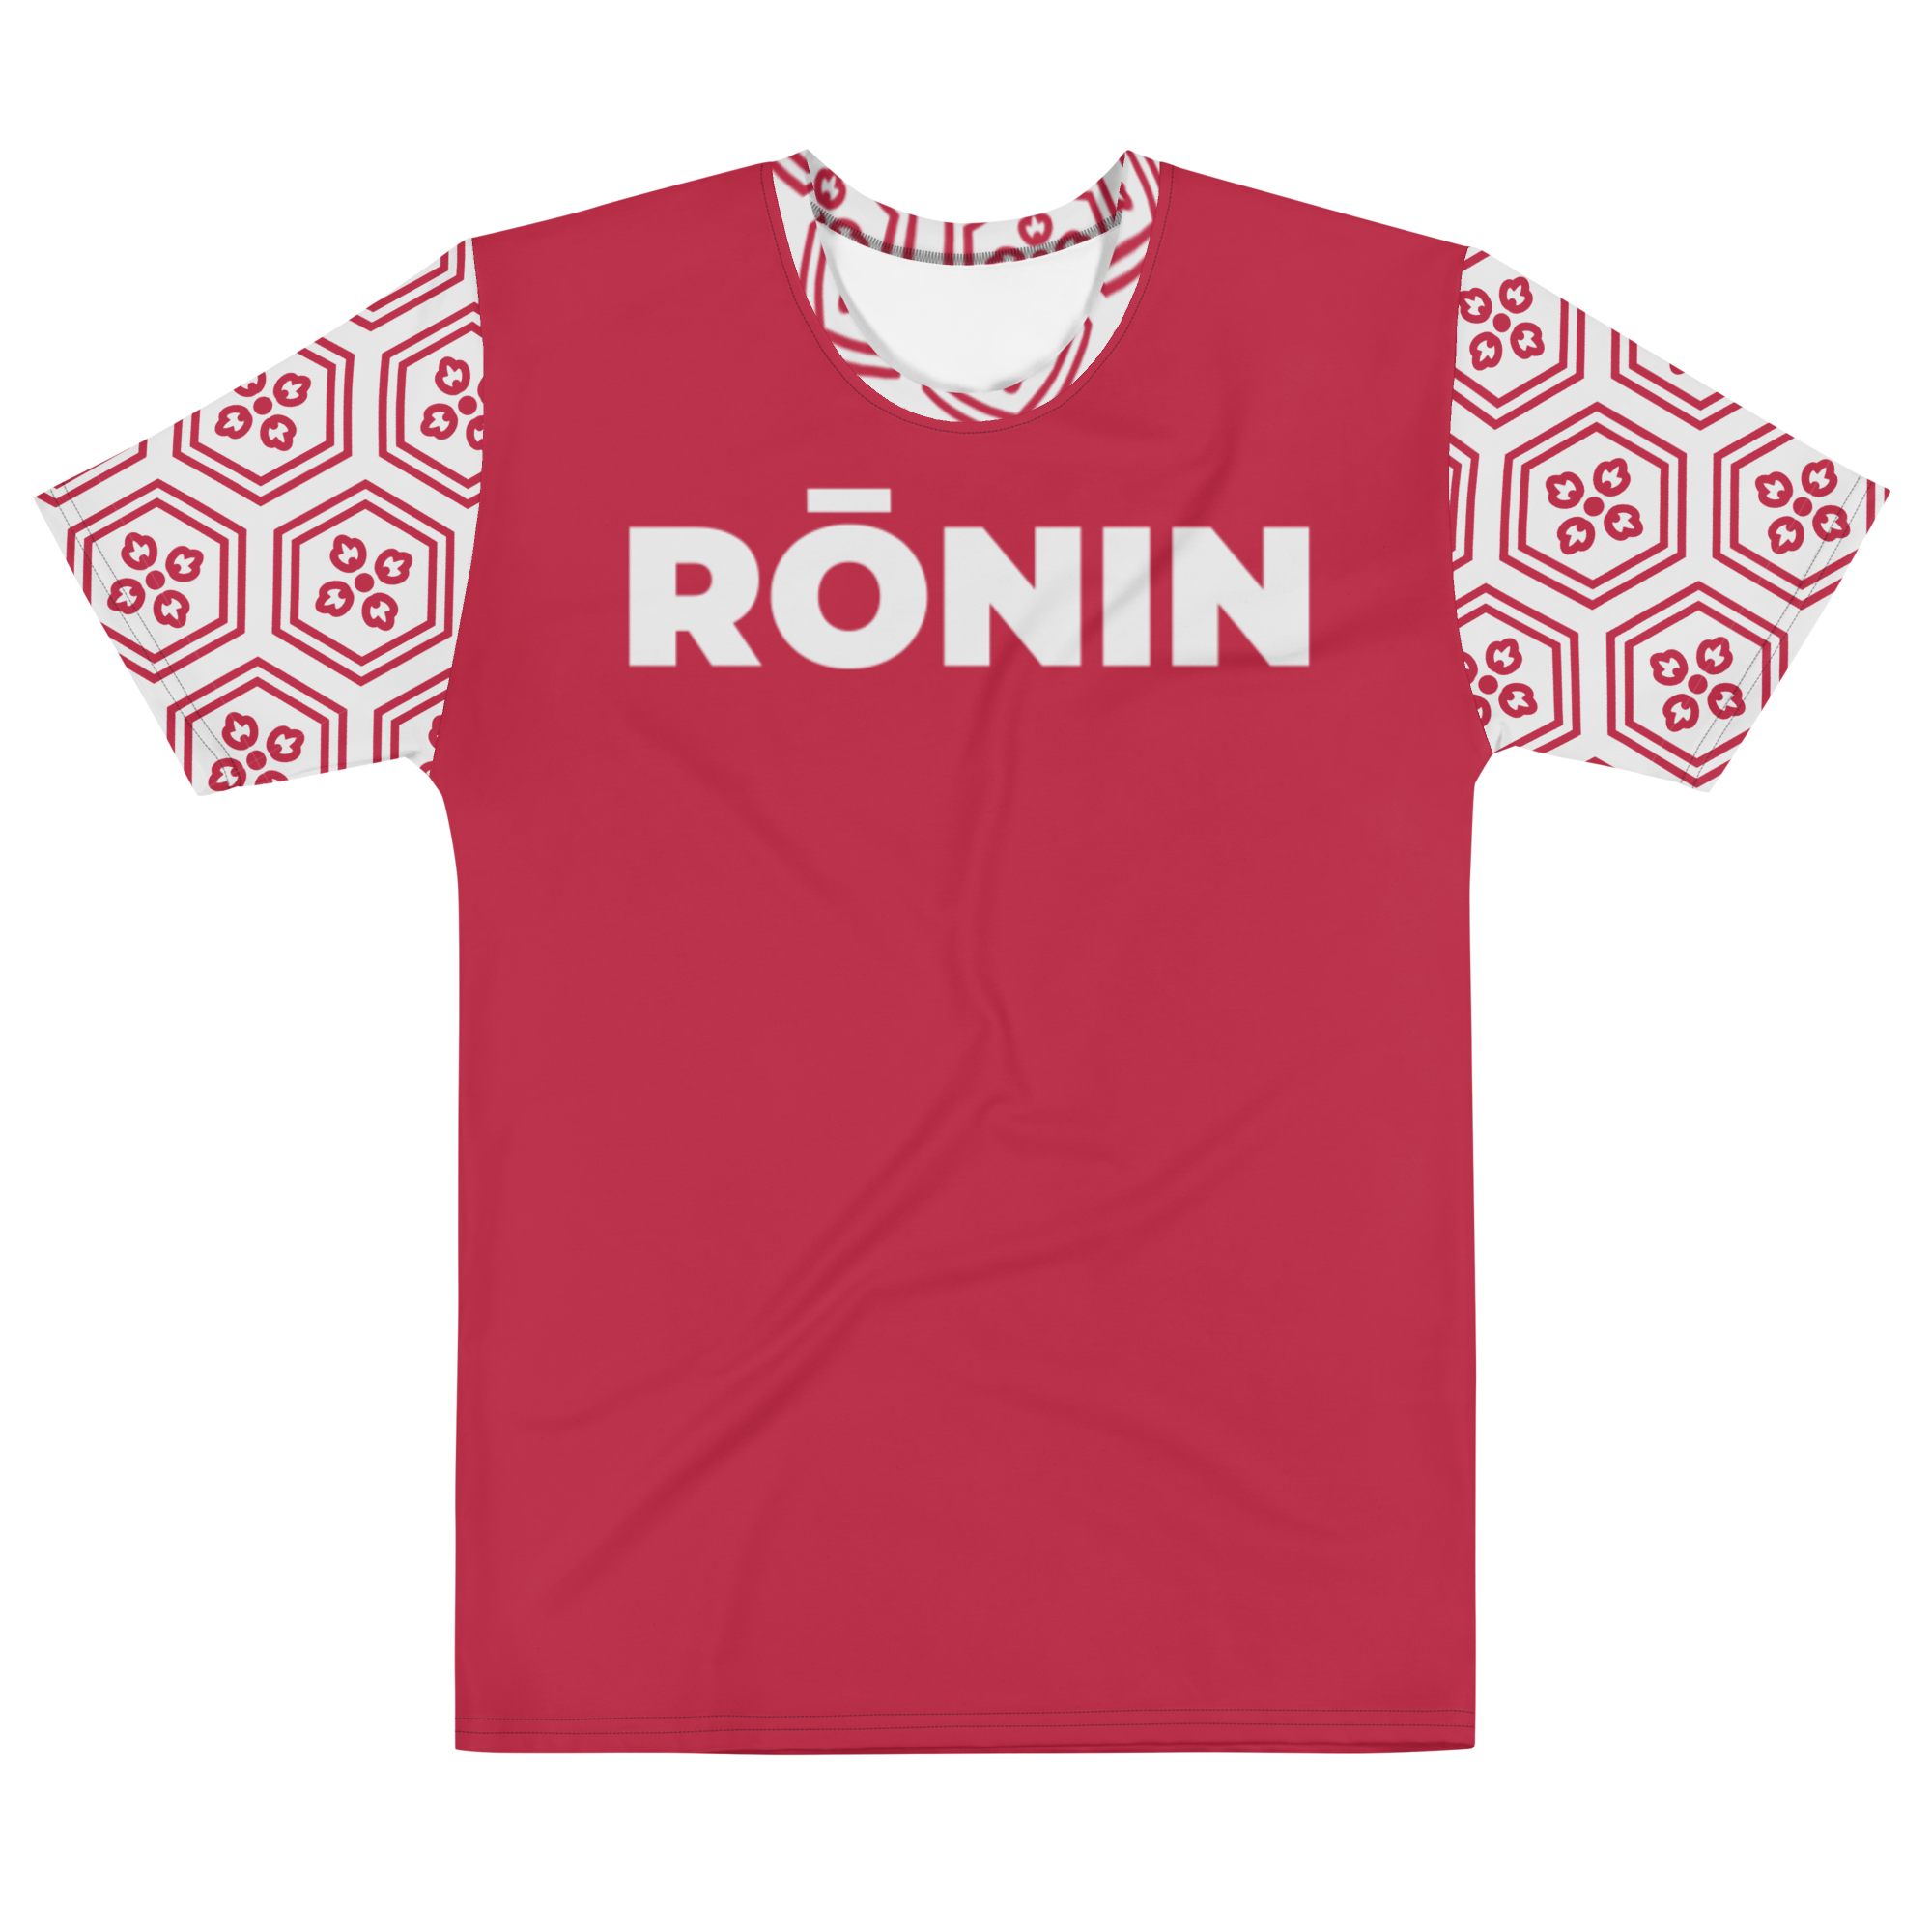 Ronin Men's t-shirt